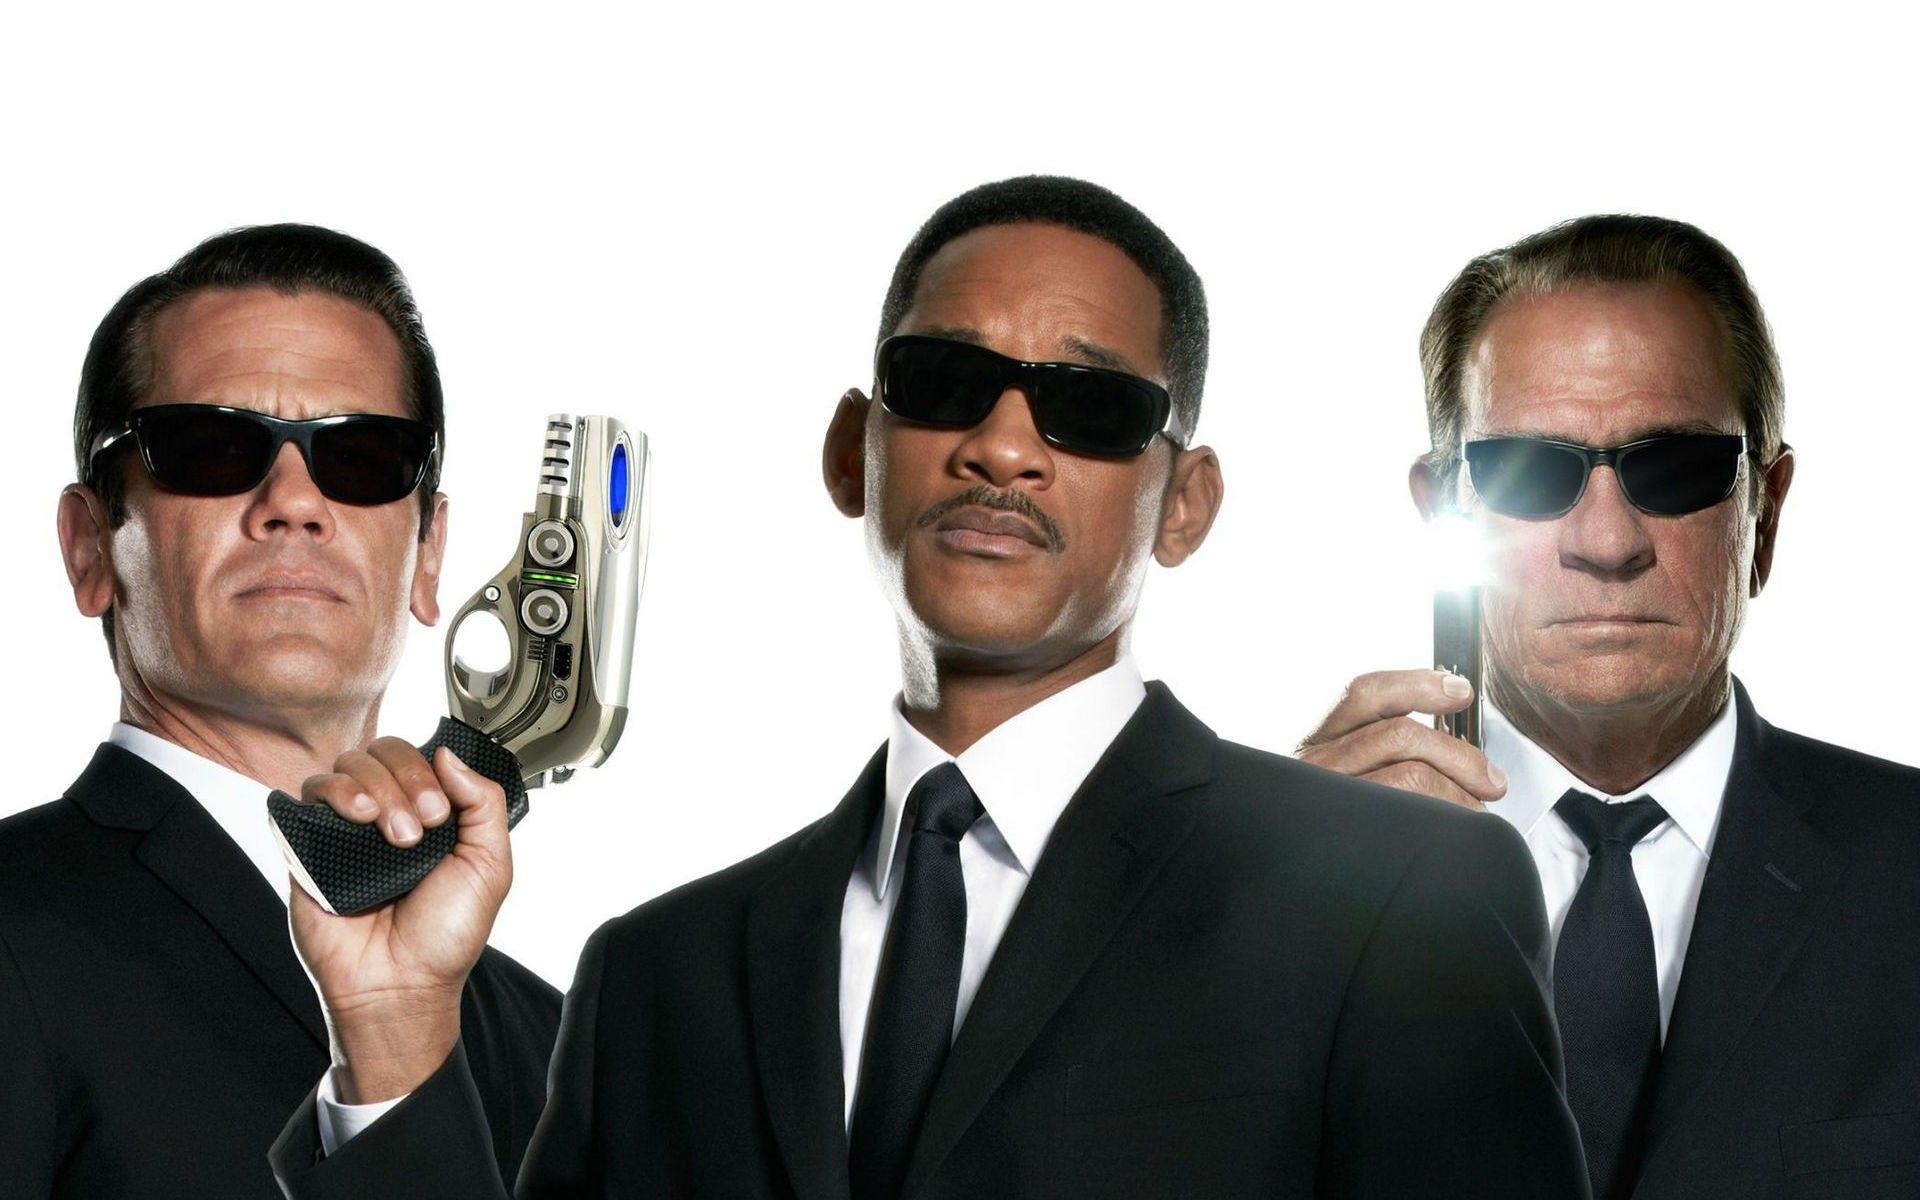 Agent J K Guns Josh Brolin Men In Black 3 Suits TV Serie